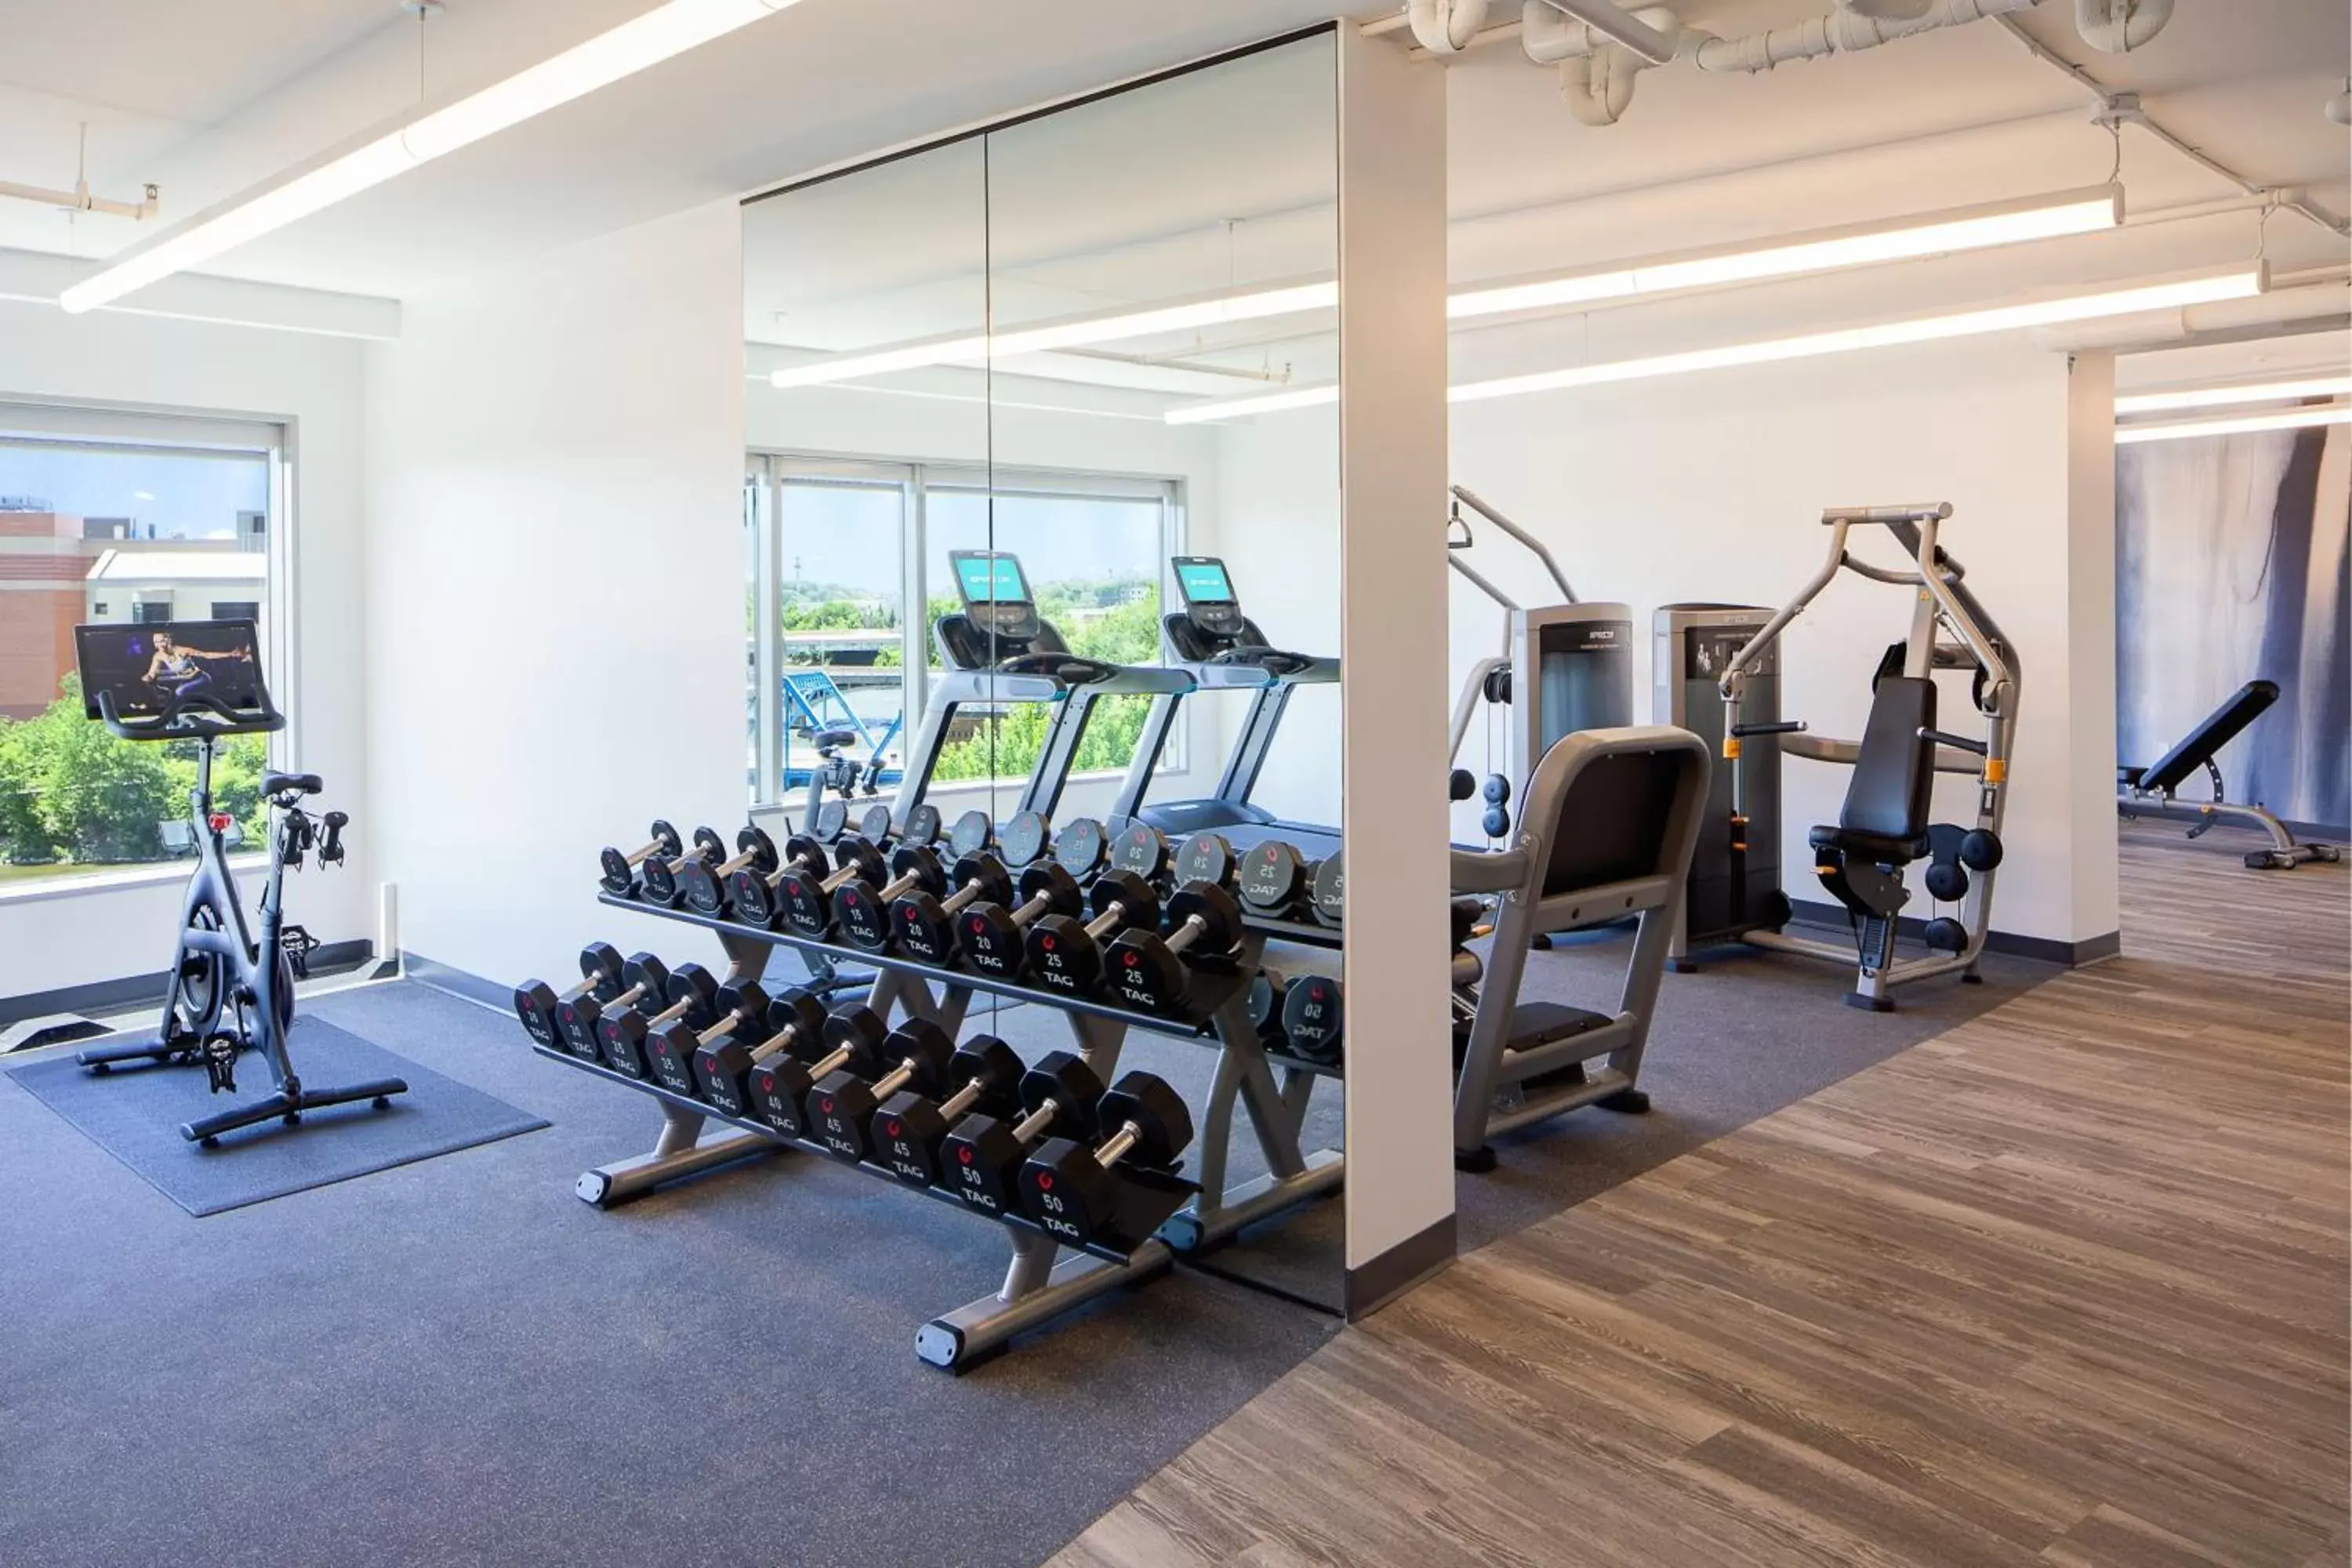 Fitness centre/facilities, Fitness Center/Facilities in JW Marriott Grand Rapids